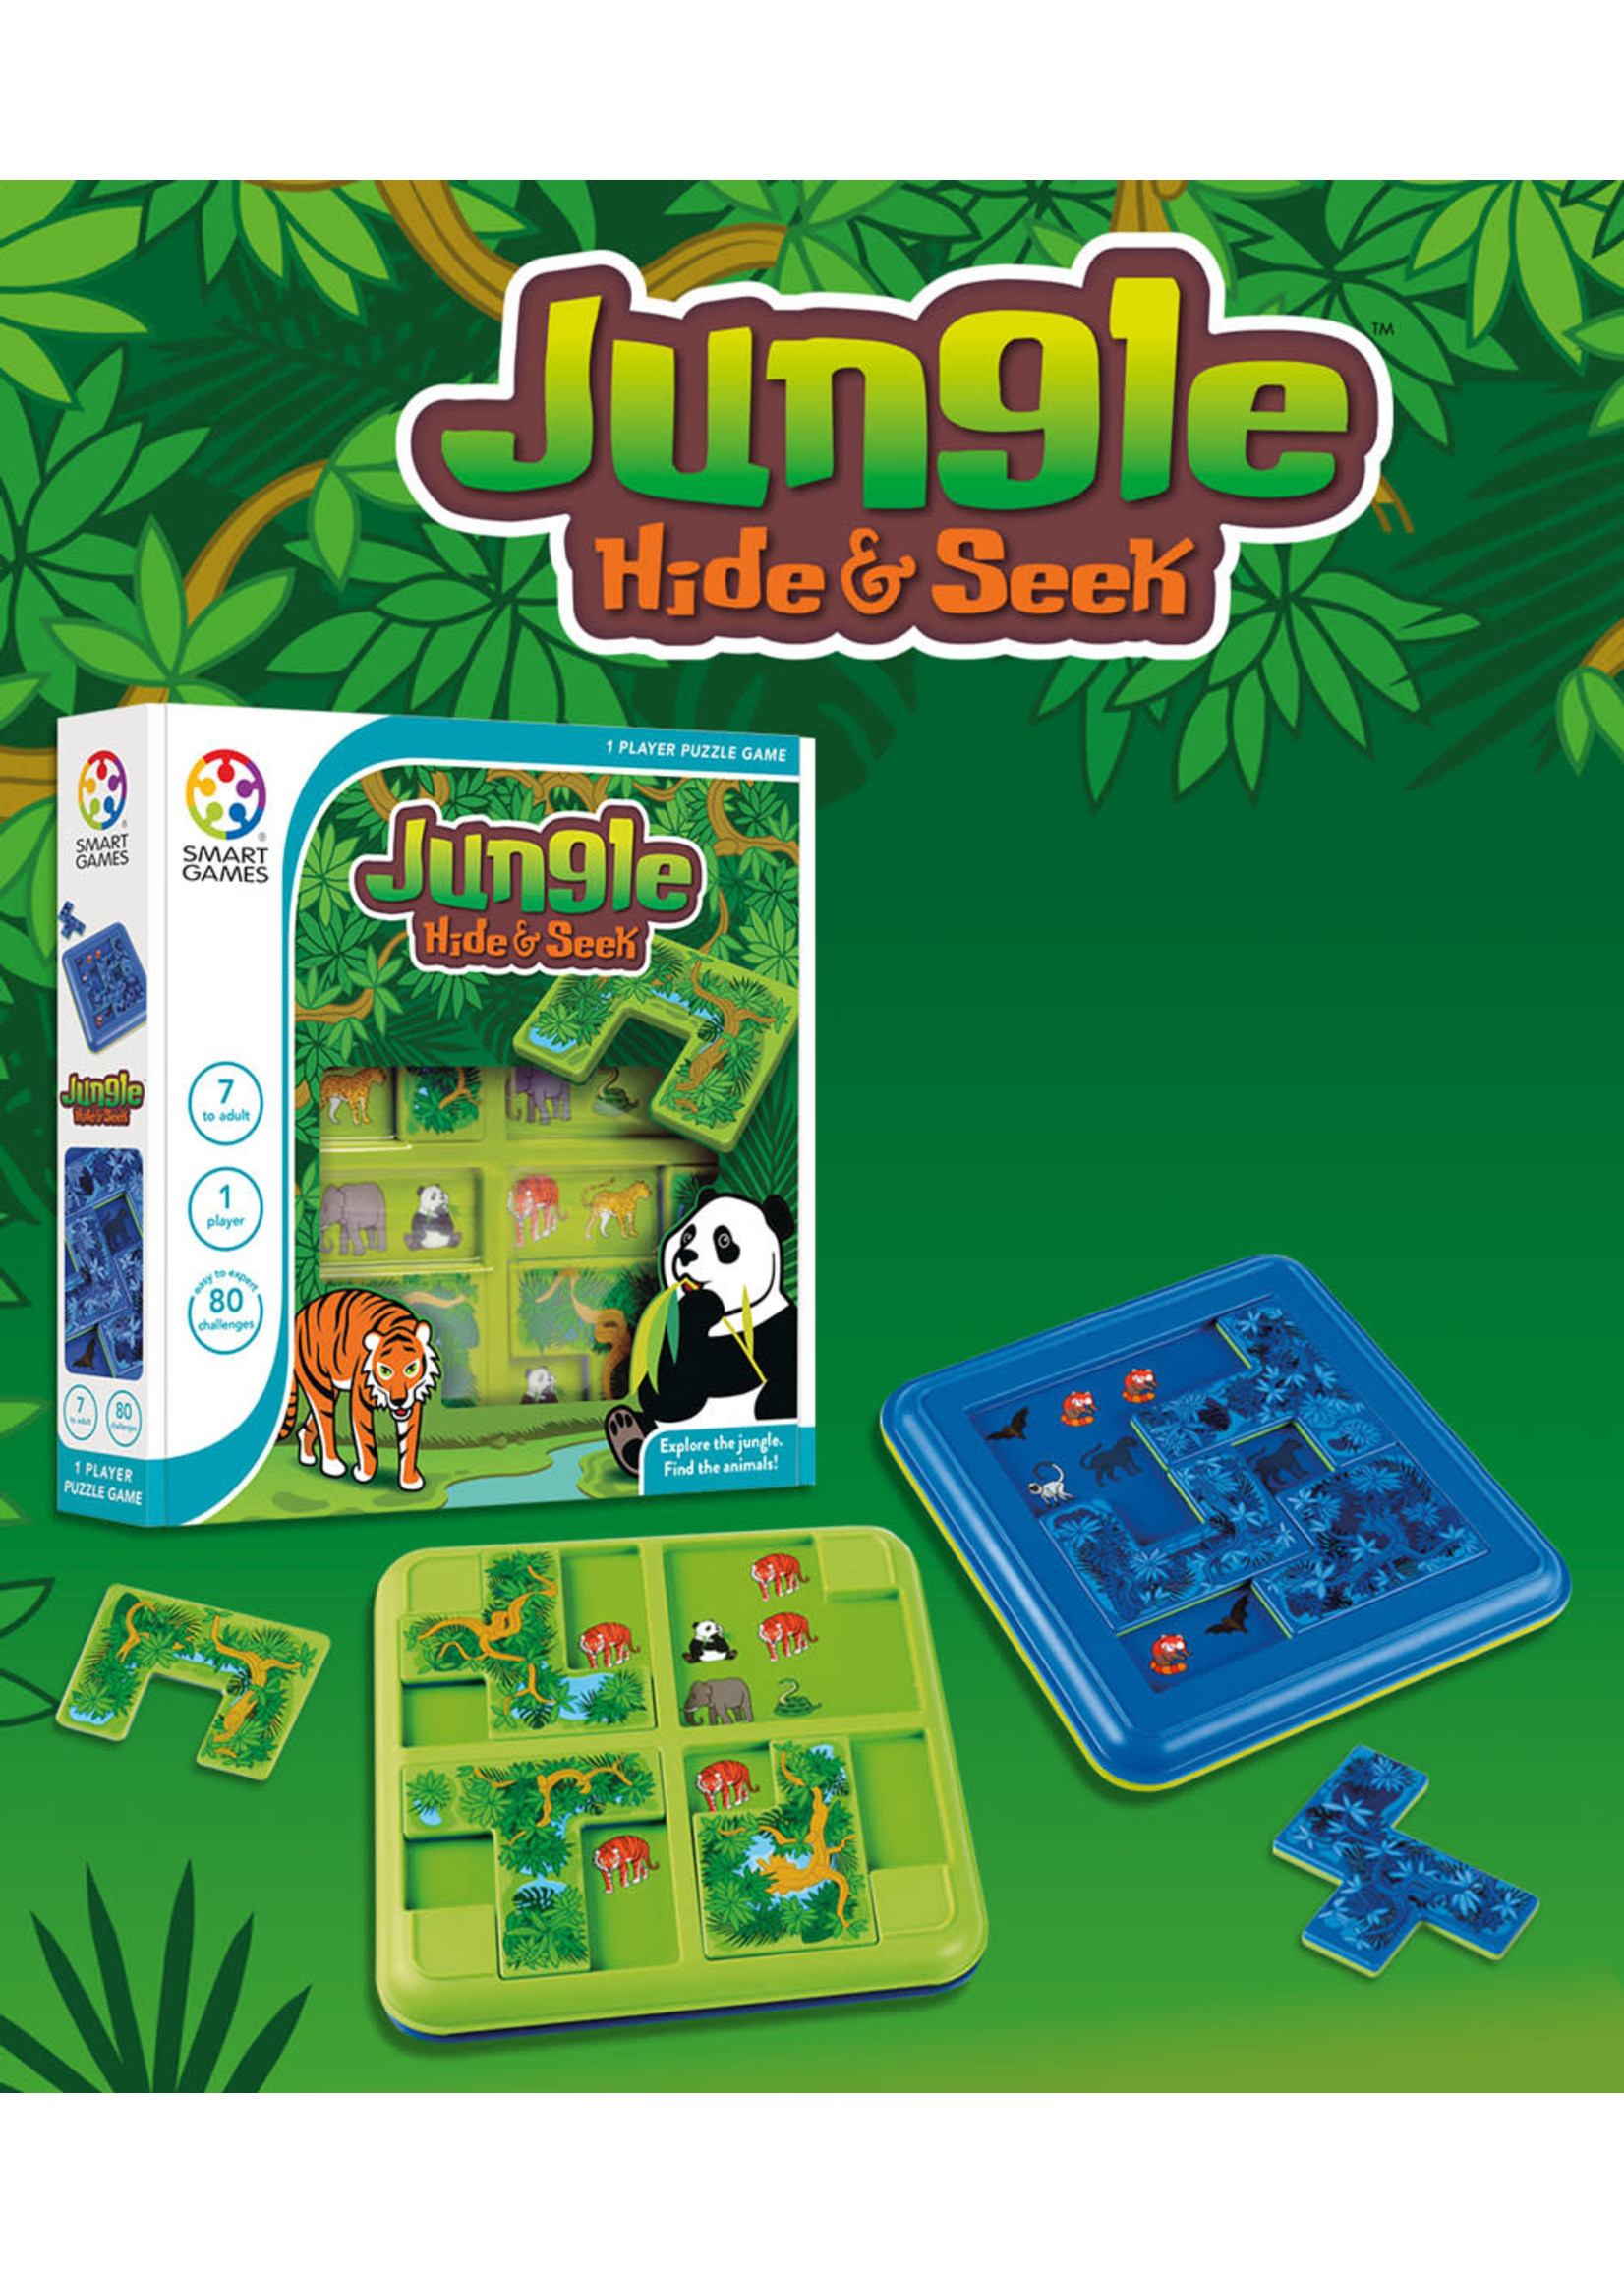 Smart games Smart games - Jungle hide & seek / Jungle cache cache